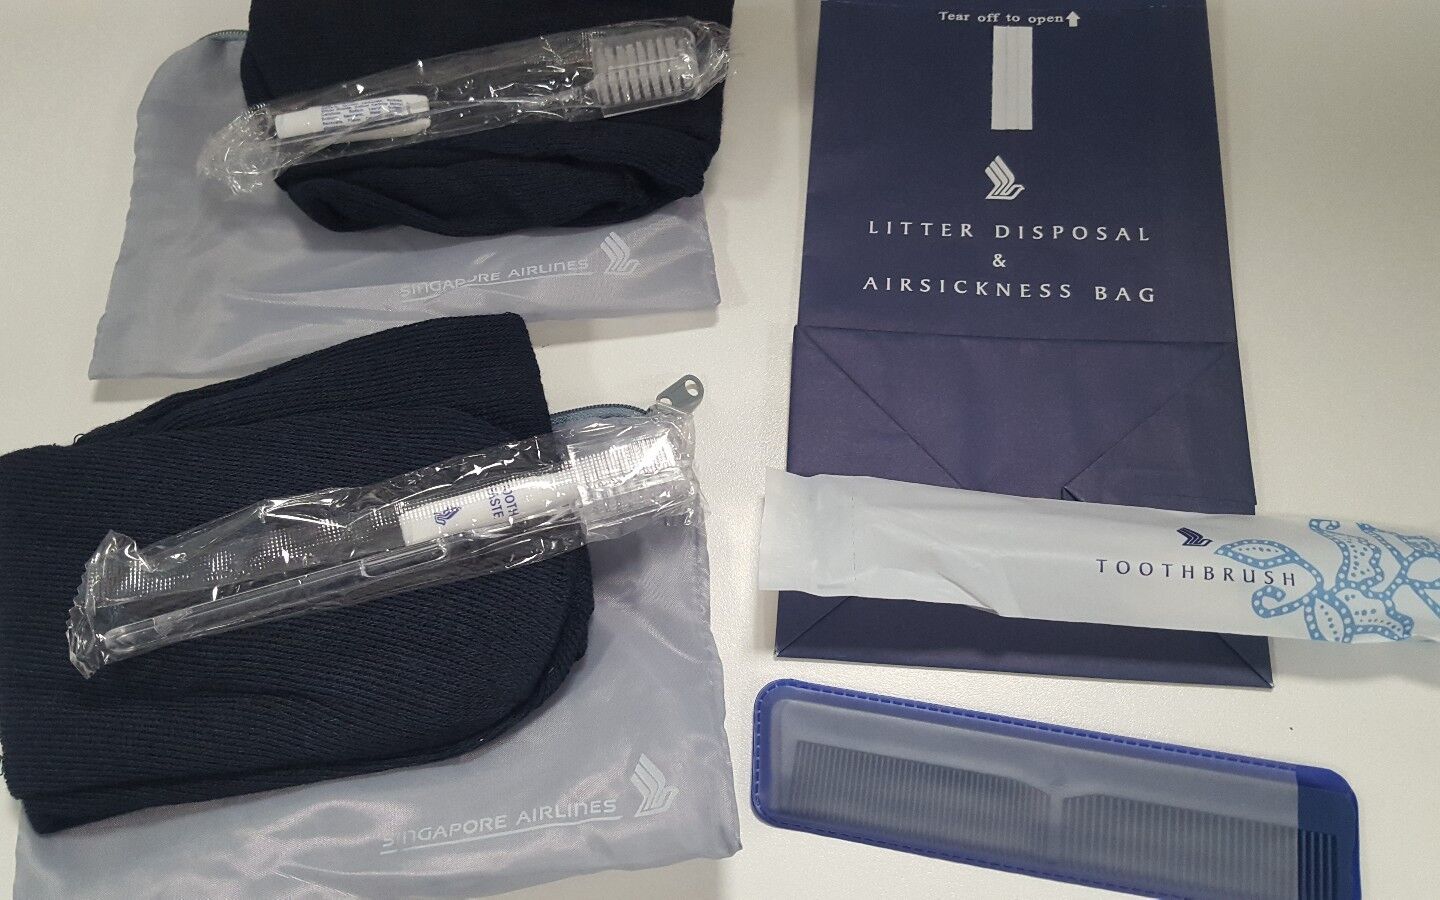 singapore airlines flight bag x2 and sick bag,comb